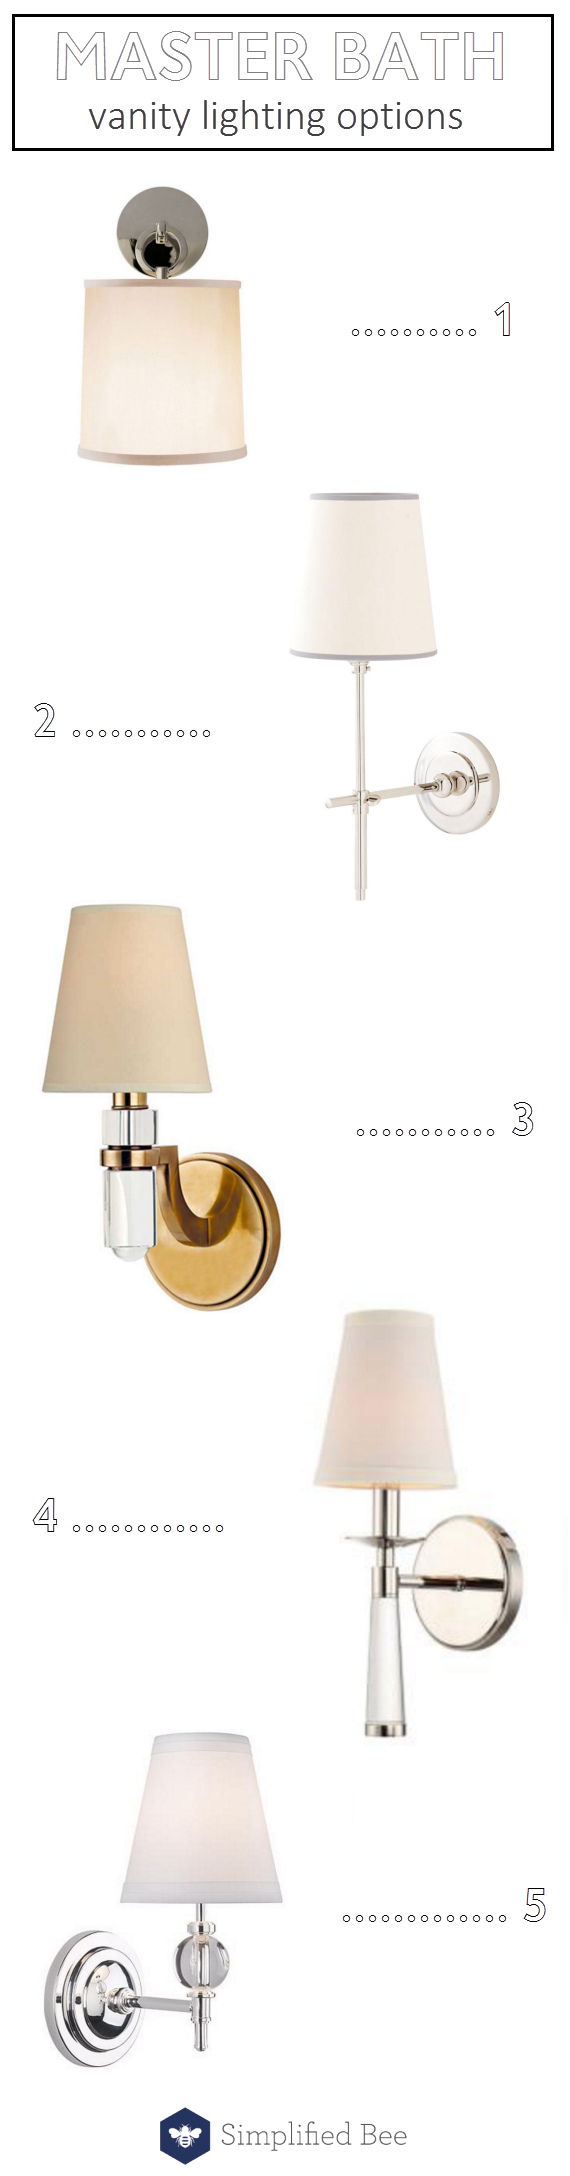 lighting options // master bathroom vanity // @simplifiedbee #oneroomchallenge